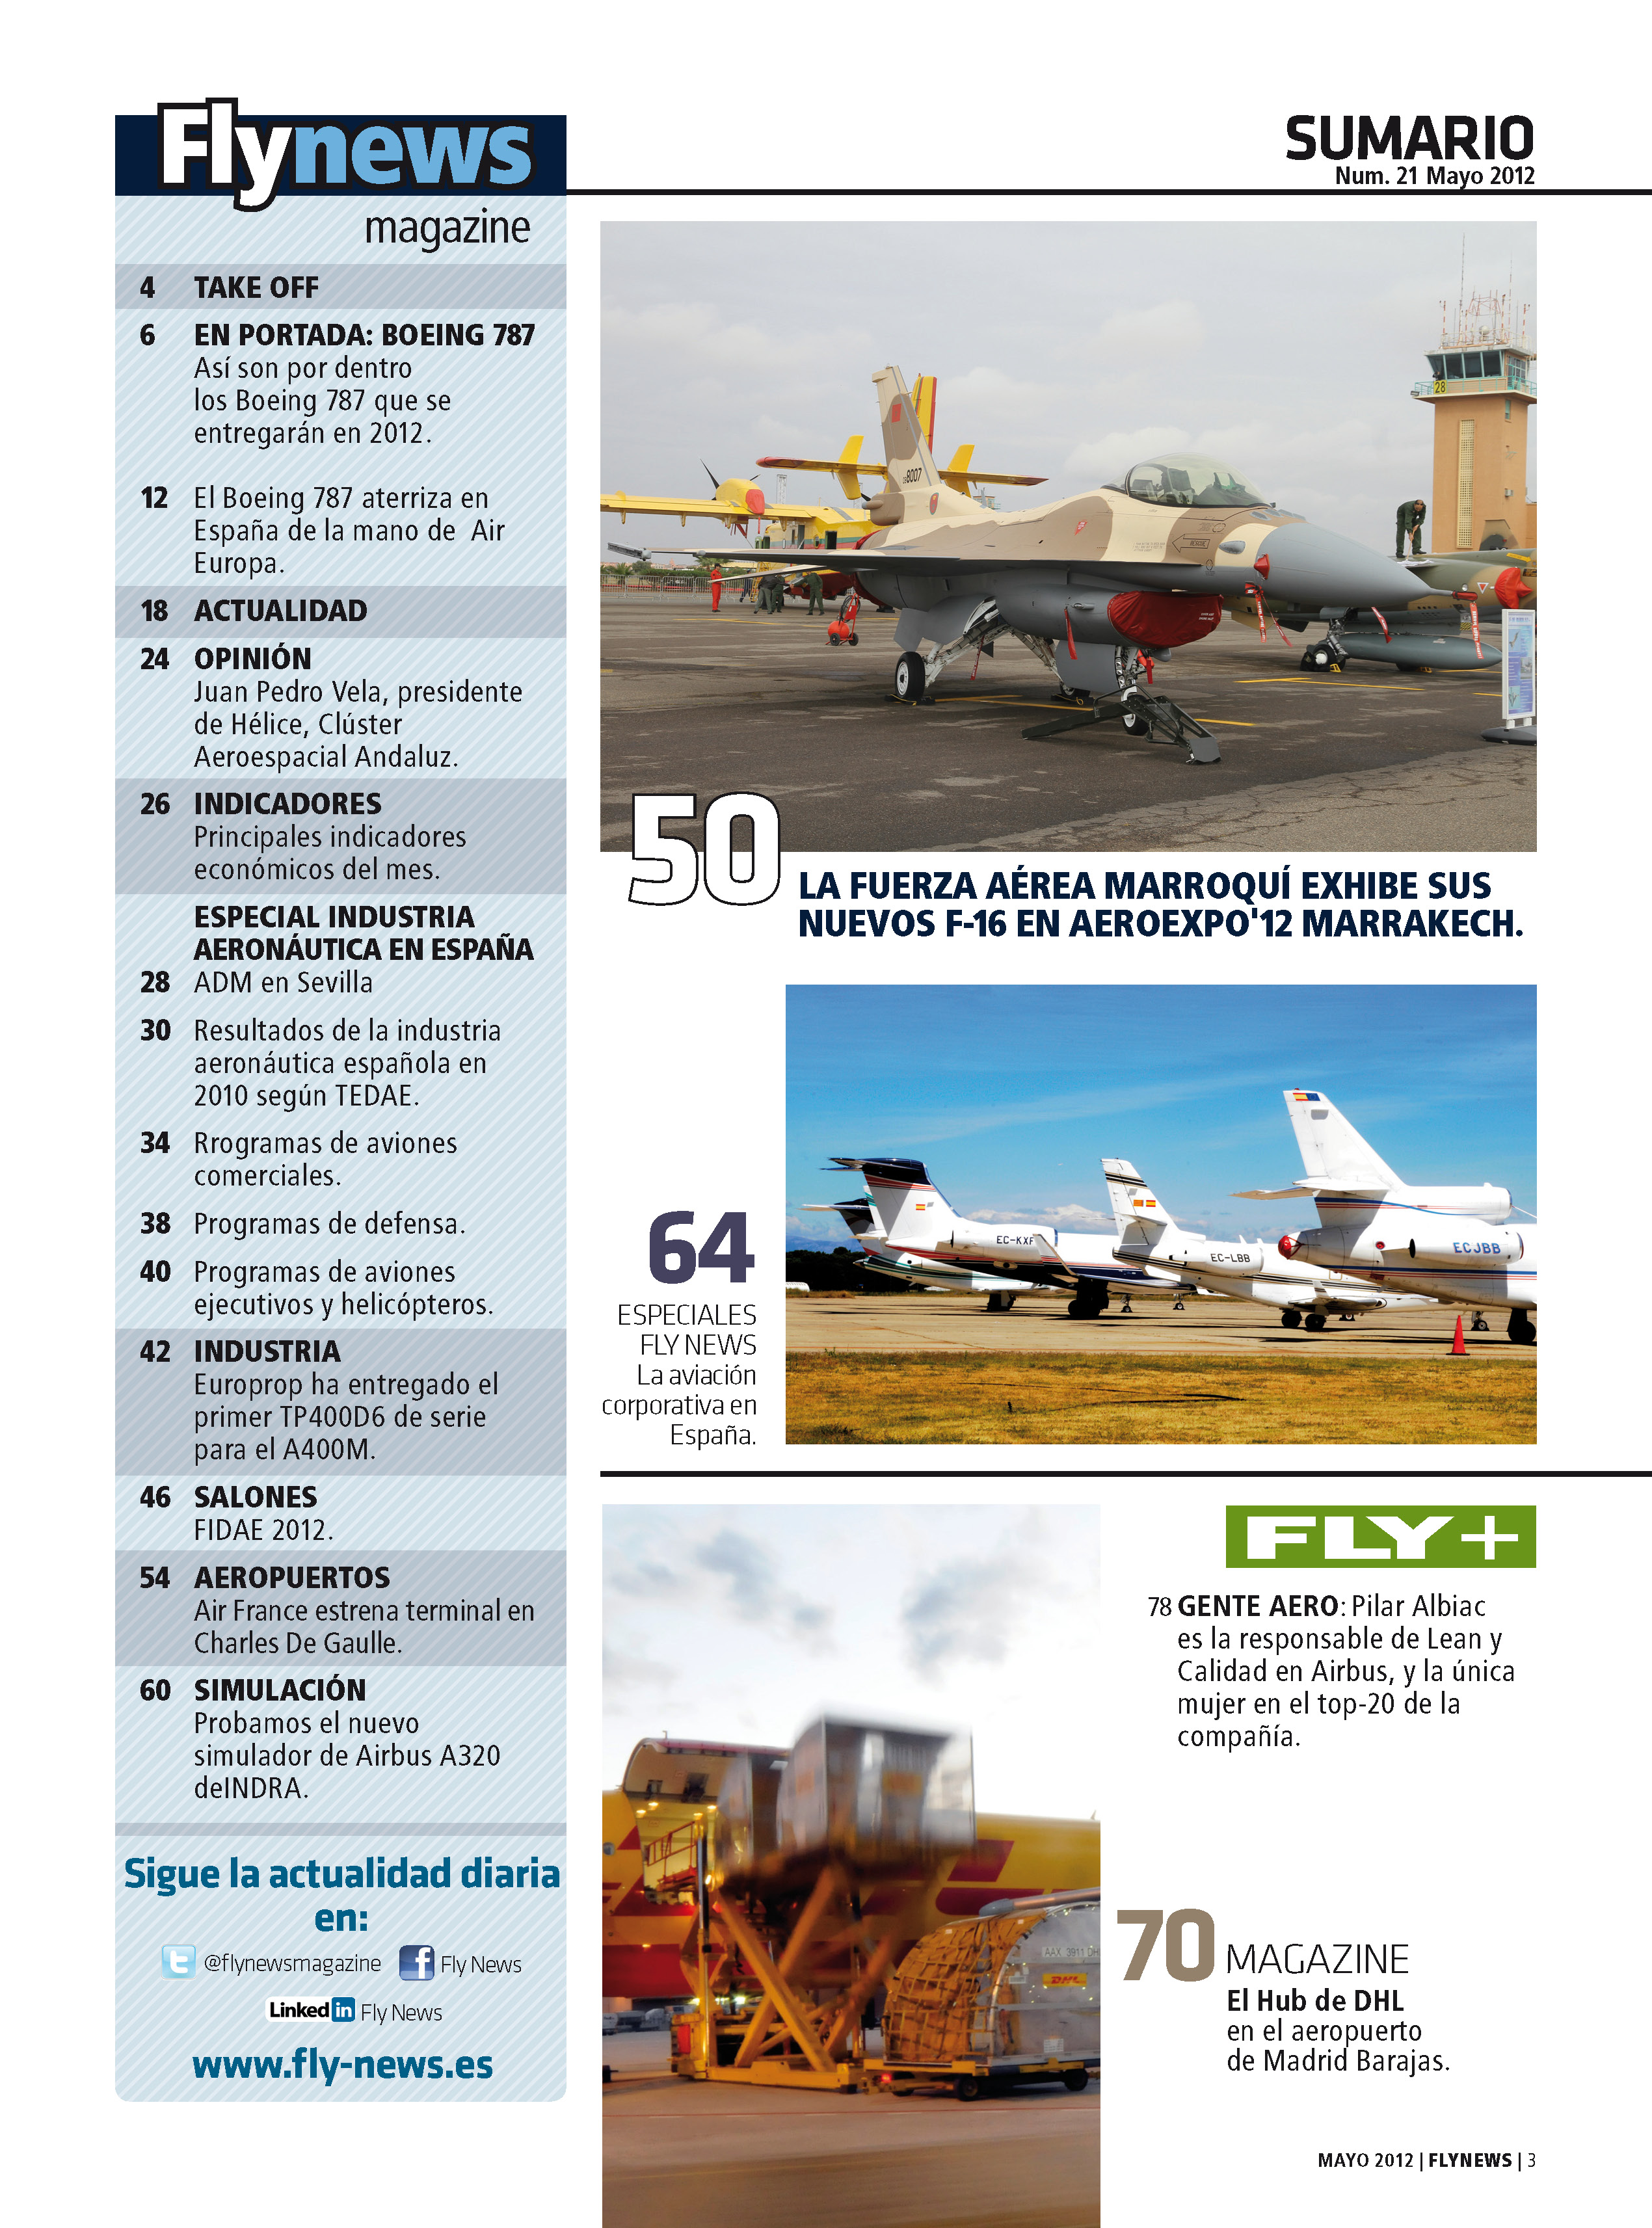 Sumario Flynews nº21 mayo/2012